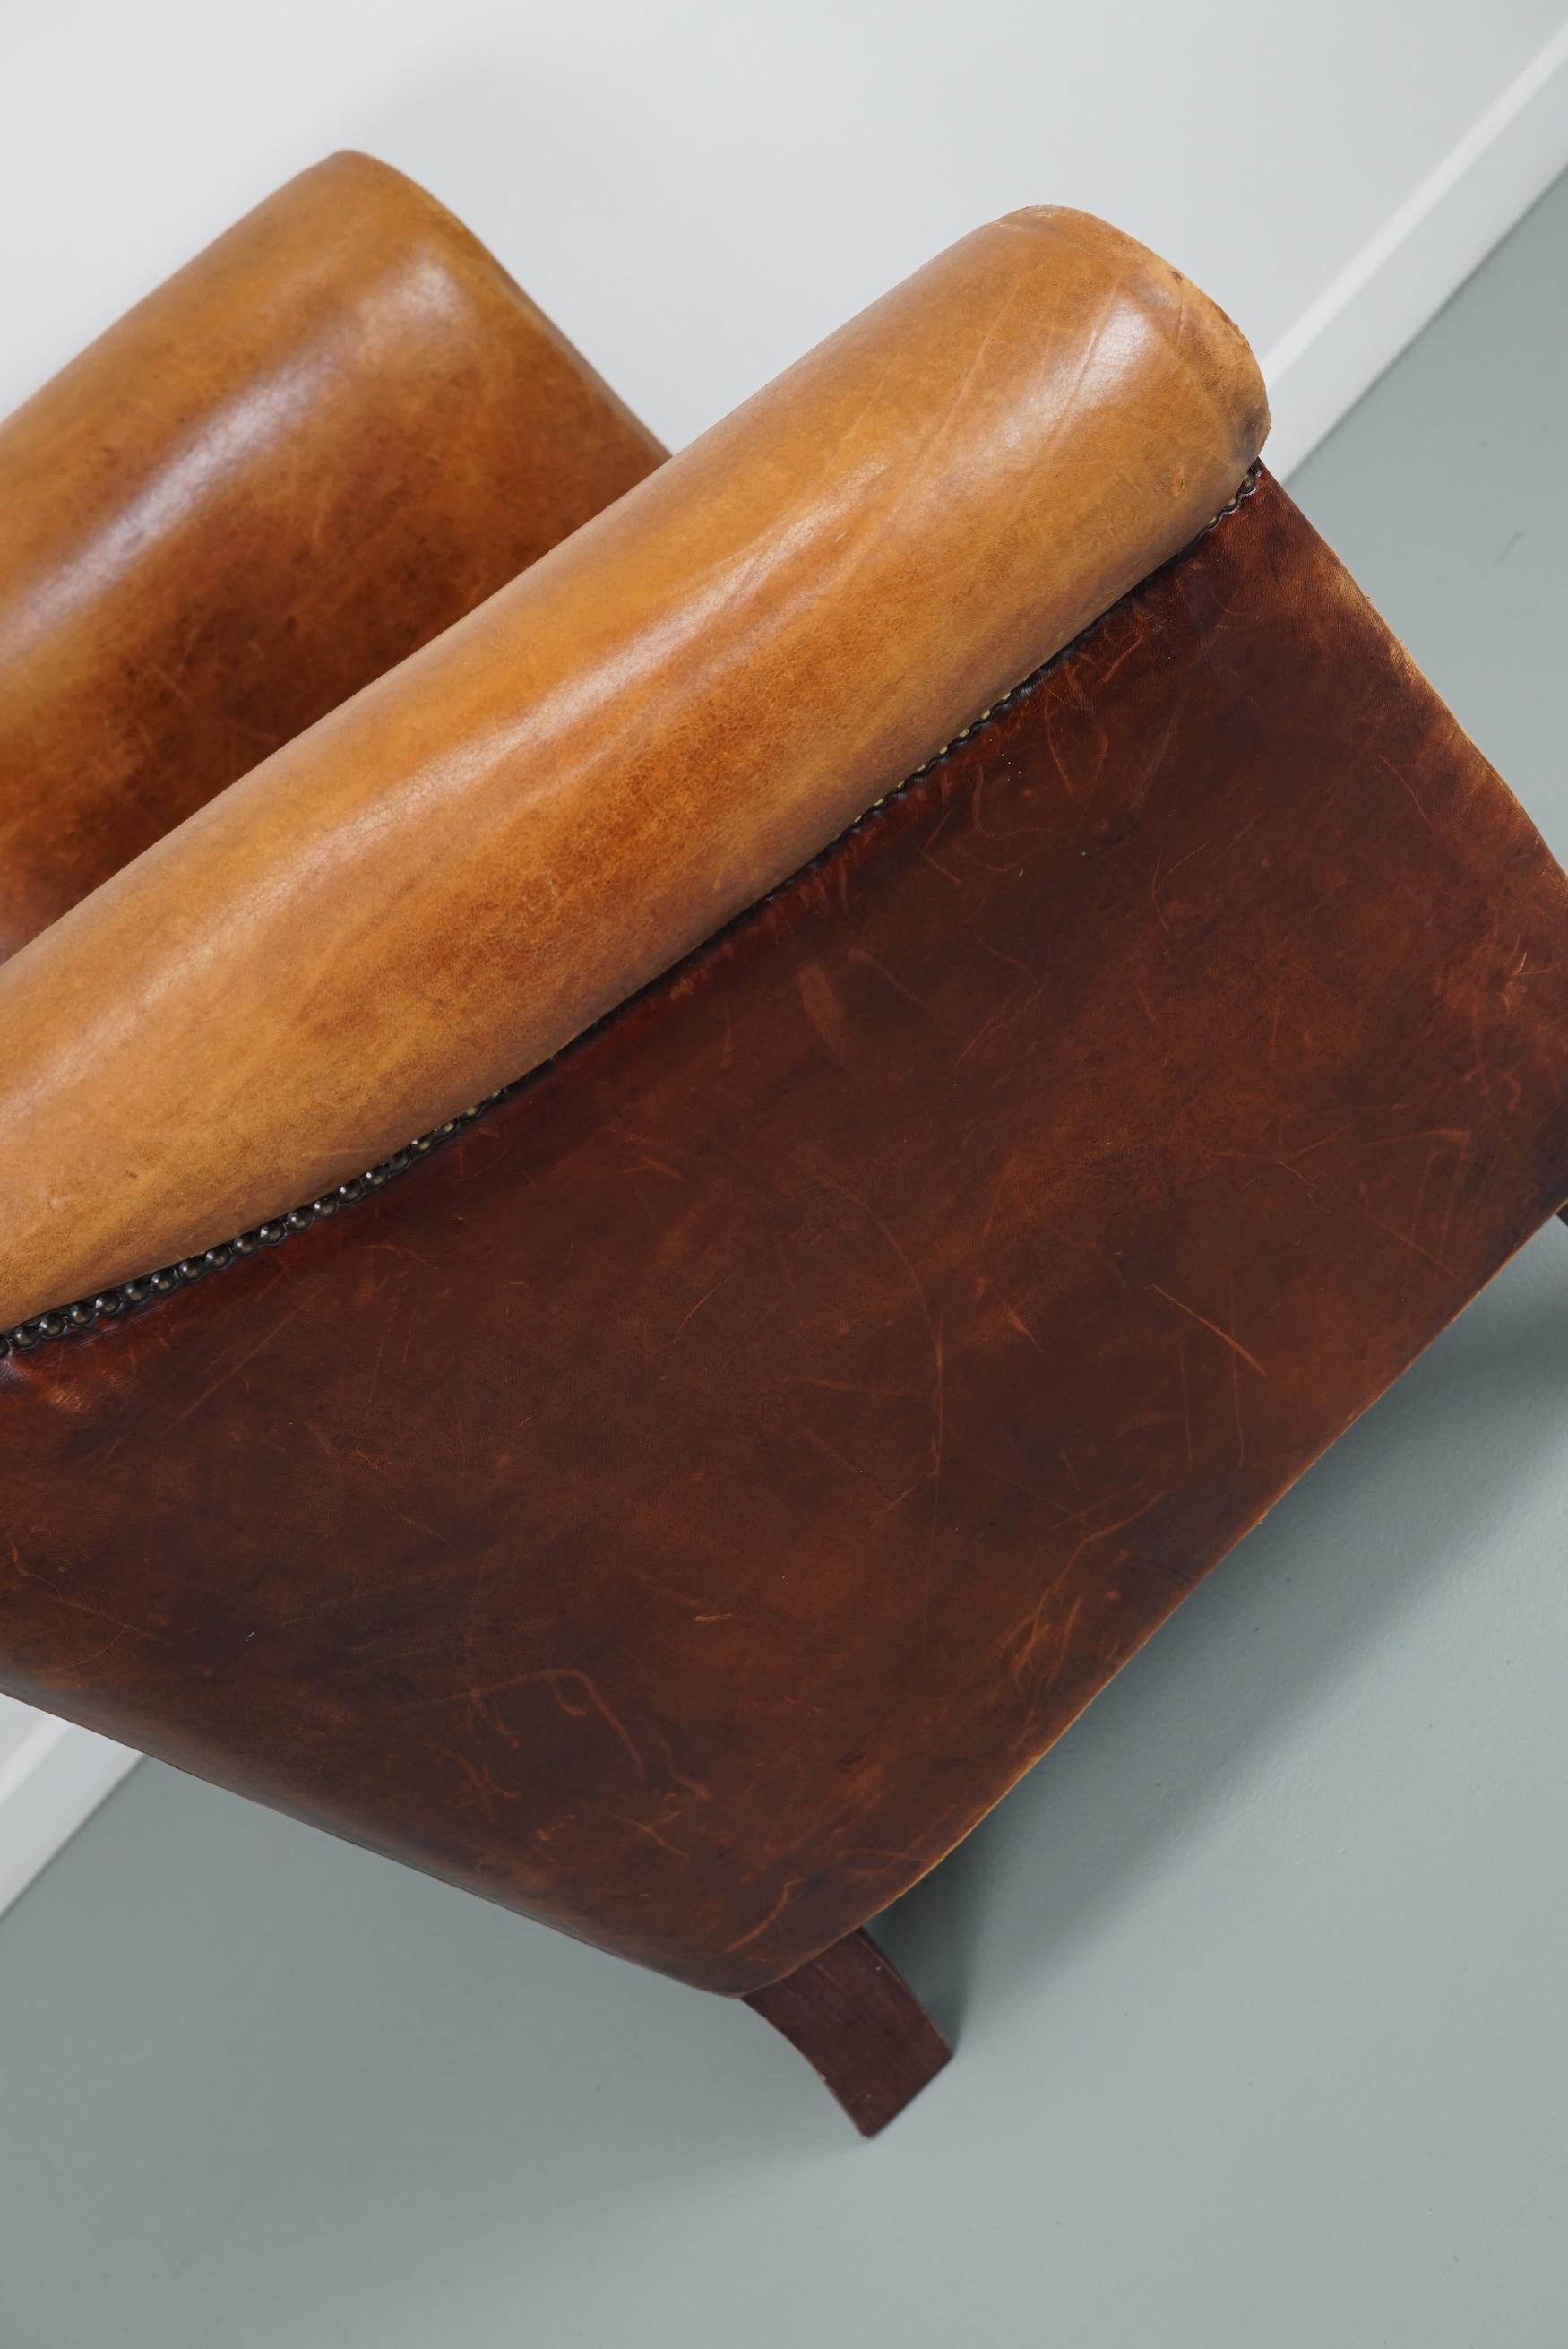 Vintage Dutch Cognac Colored Leather Club Chair For Sale 3